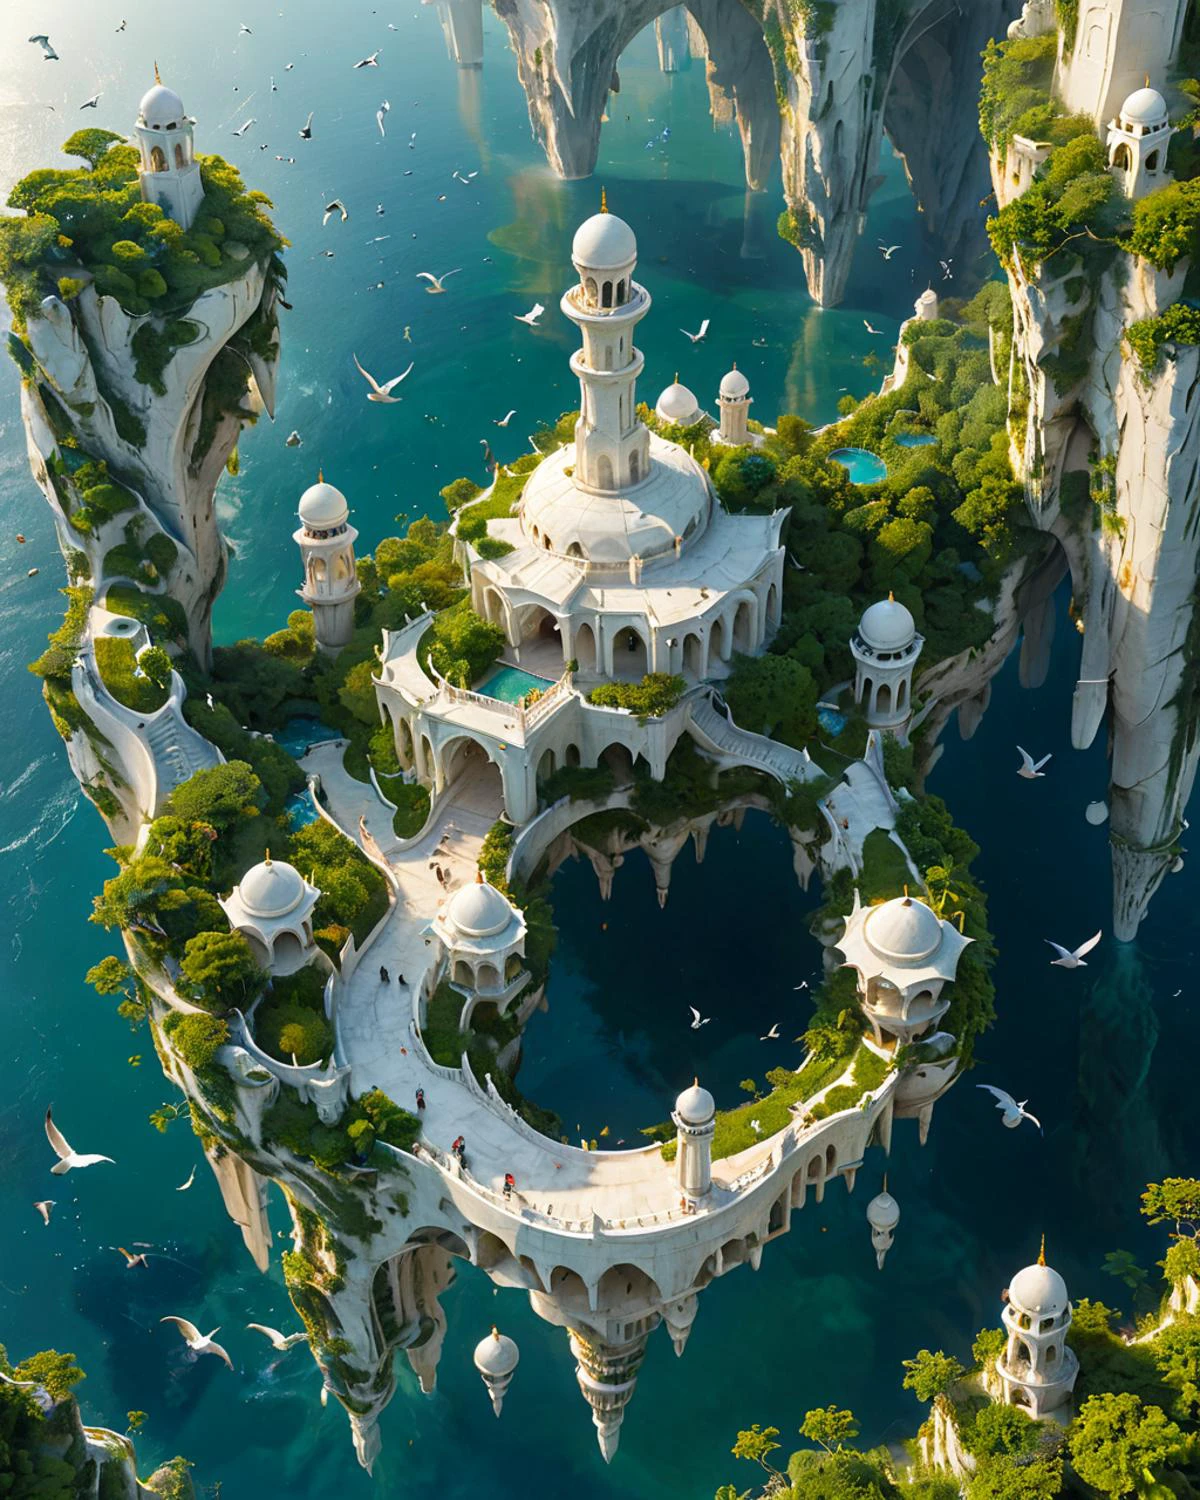 schwebende Fantasiestadt, formschöne weiße Marmortürme, erinnert an das Taj Mahal, grüne Vegetation, Ozean, Seevögel, fenliexl